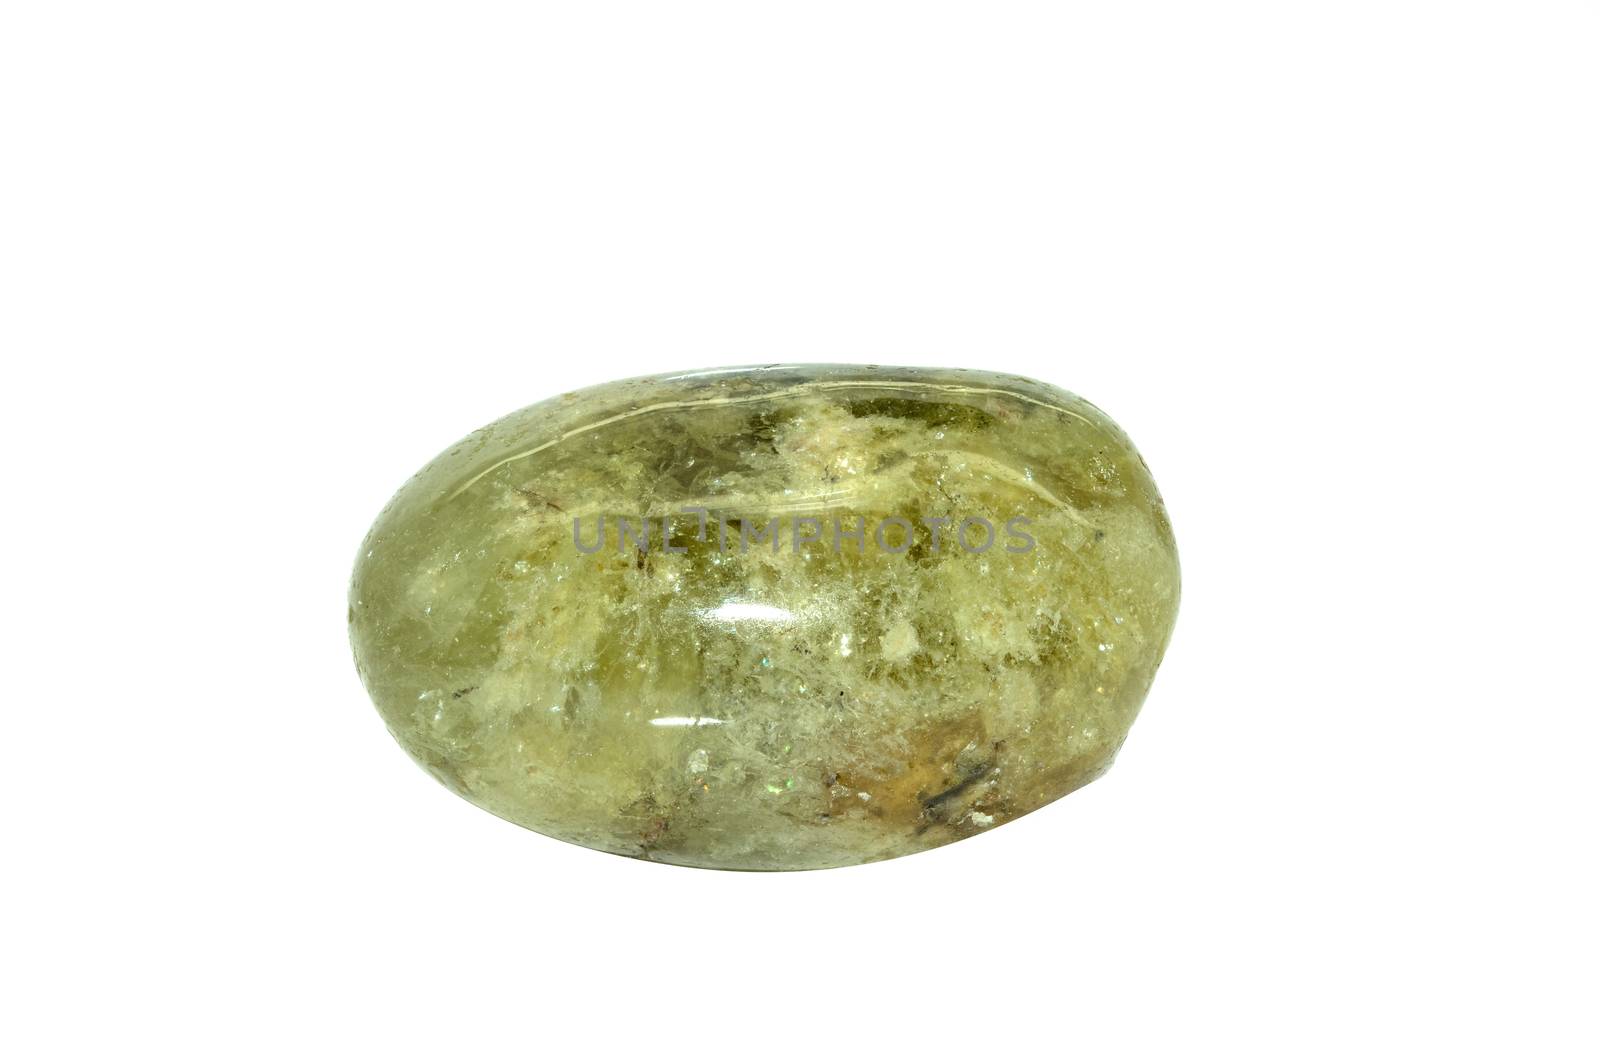 Sample of a beautiful tumbled Demantoid - Green Garnet semiprecious stone isolated on white